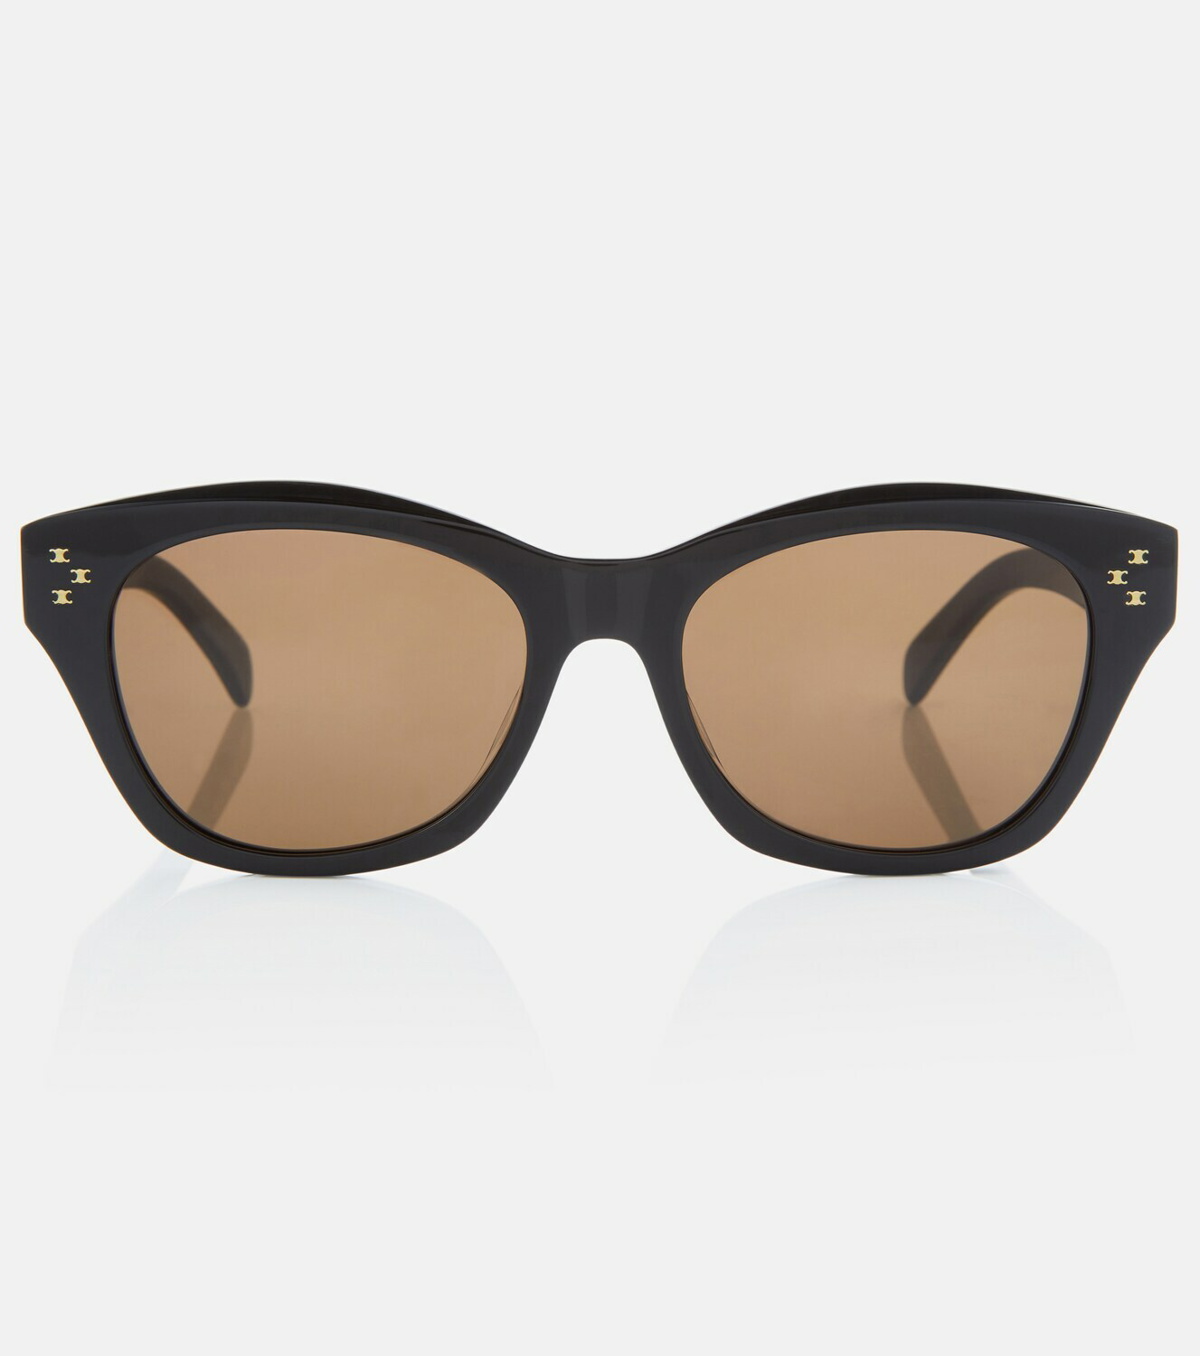 Black Cat-eye acetate sunglasses, Celine Eyewear